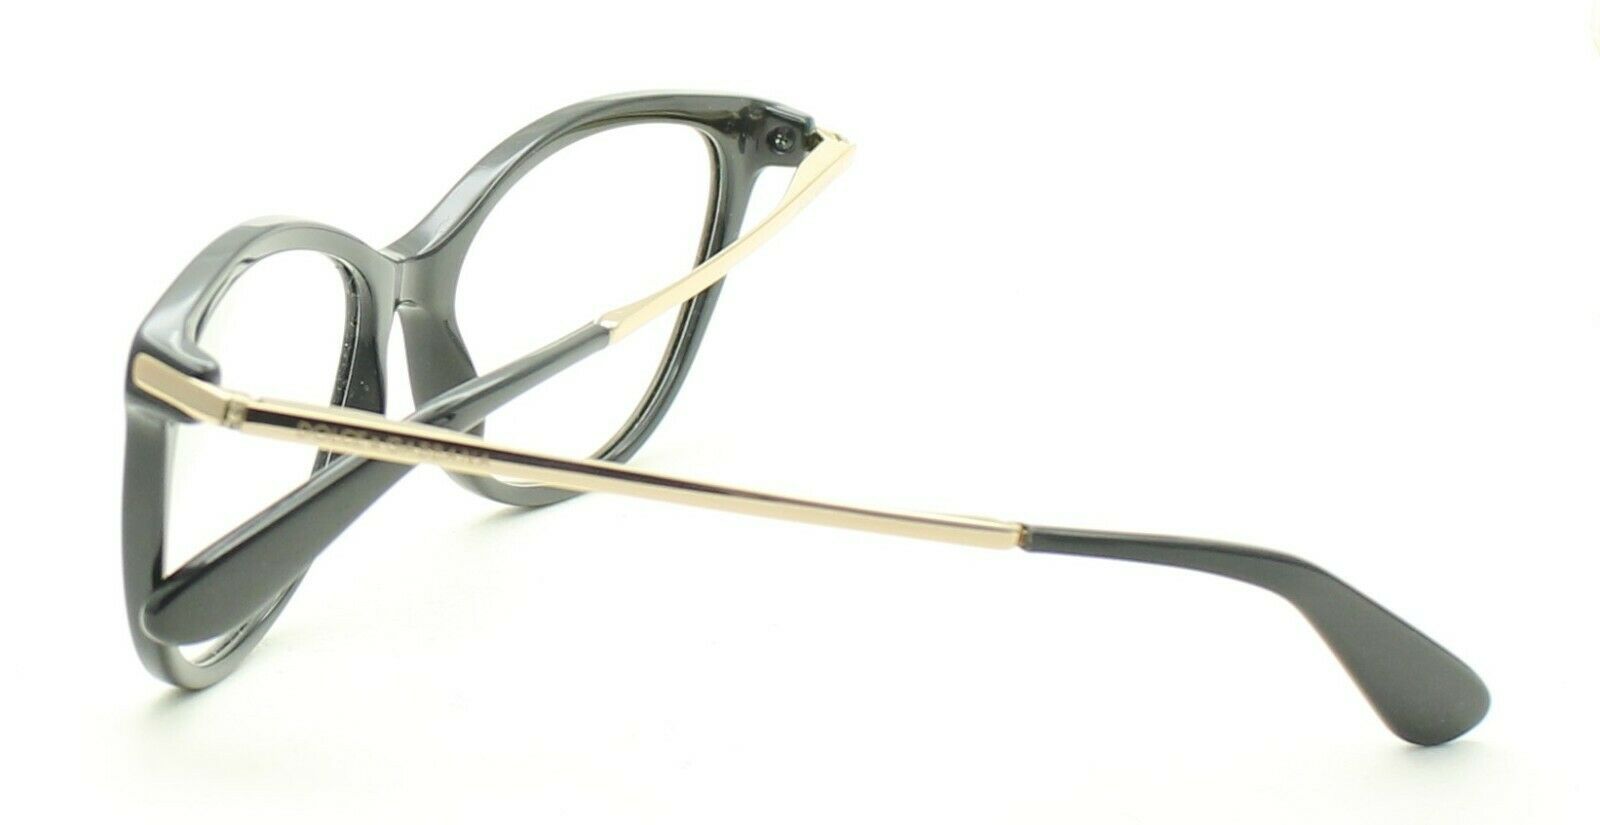 LEVI'S LV 1018 086 52mm Glasses RX Optical Eyewear Frames Eyeglasses - New  BNIB - GGV Eyewear